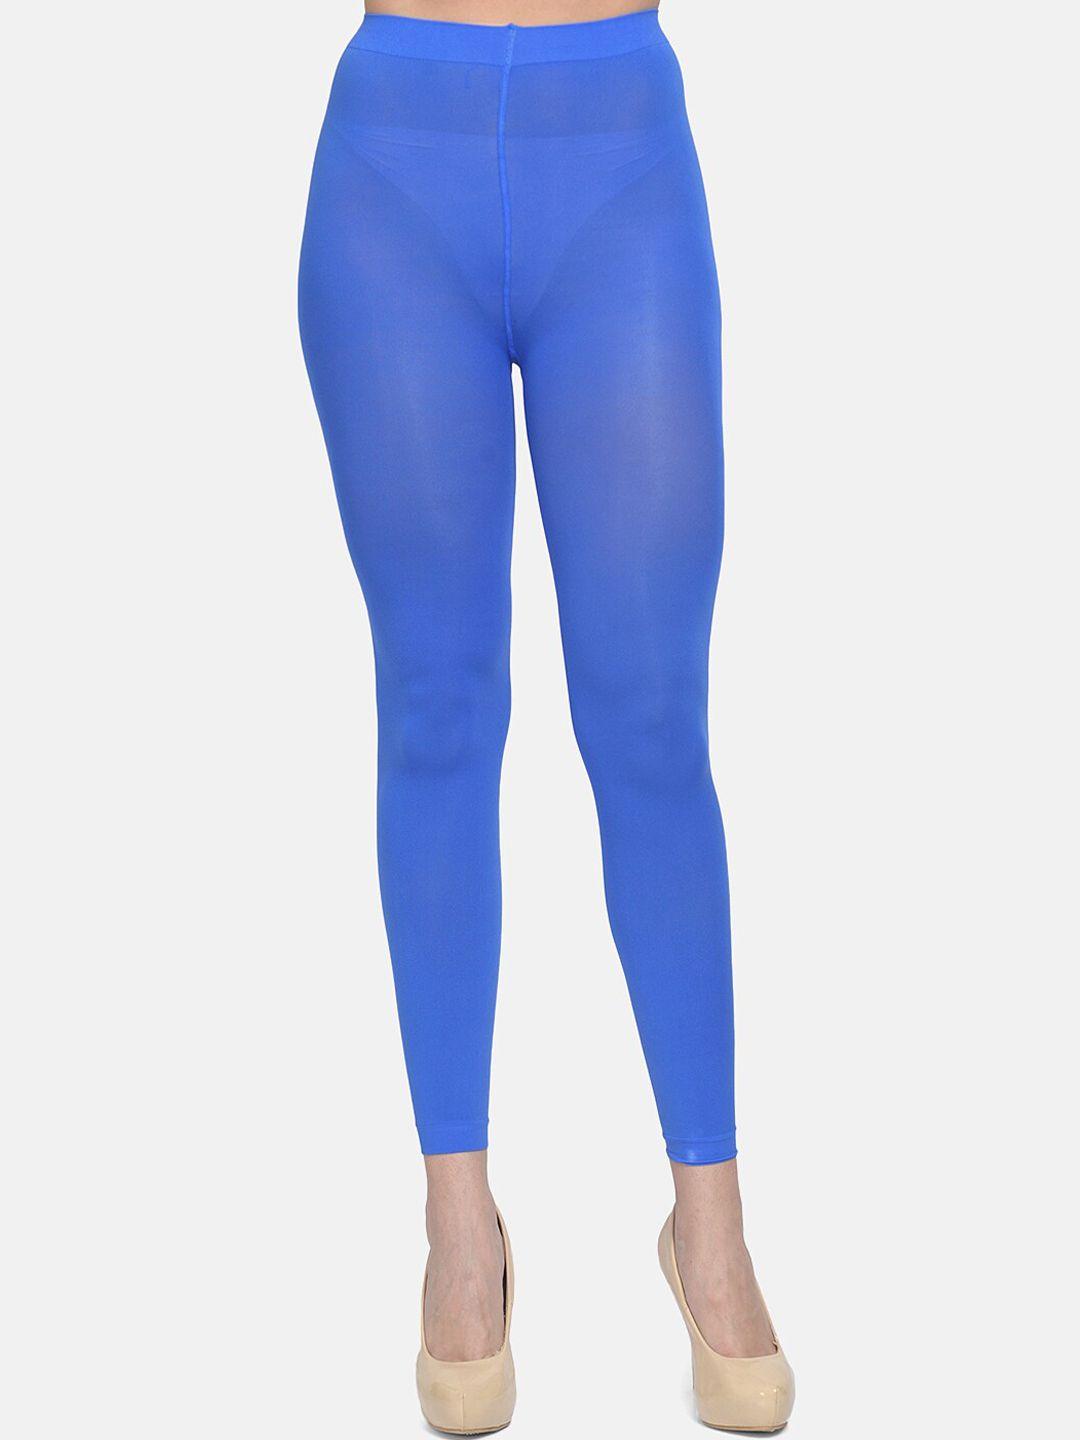 mod & shy women blue solid pantyhose stockings